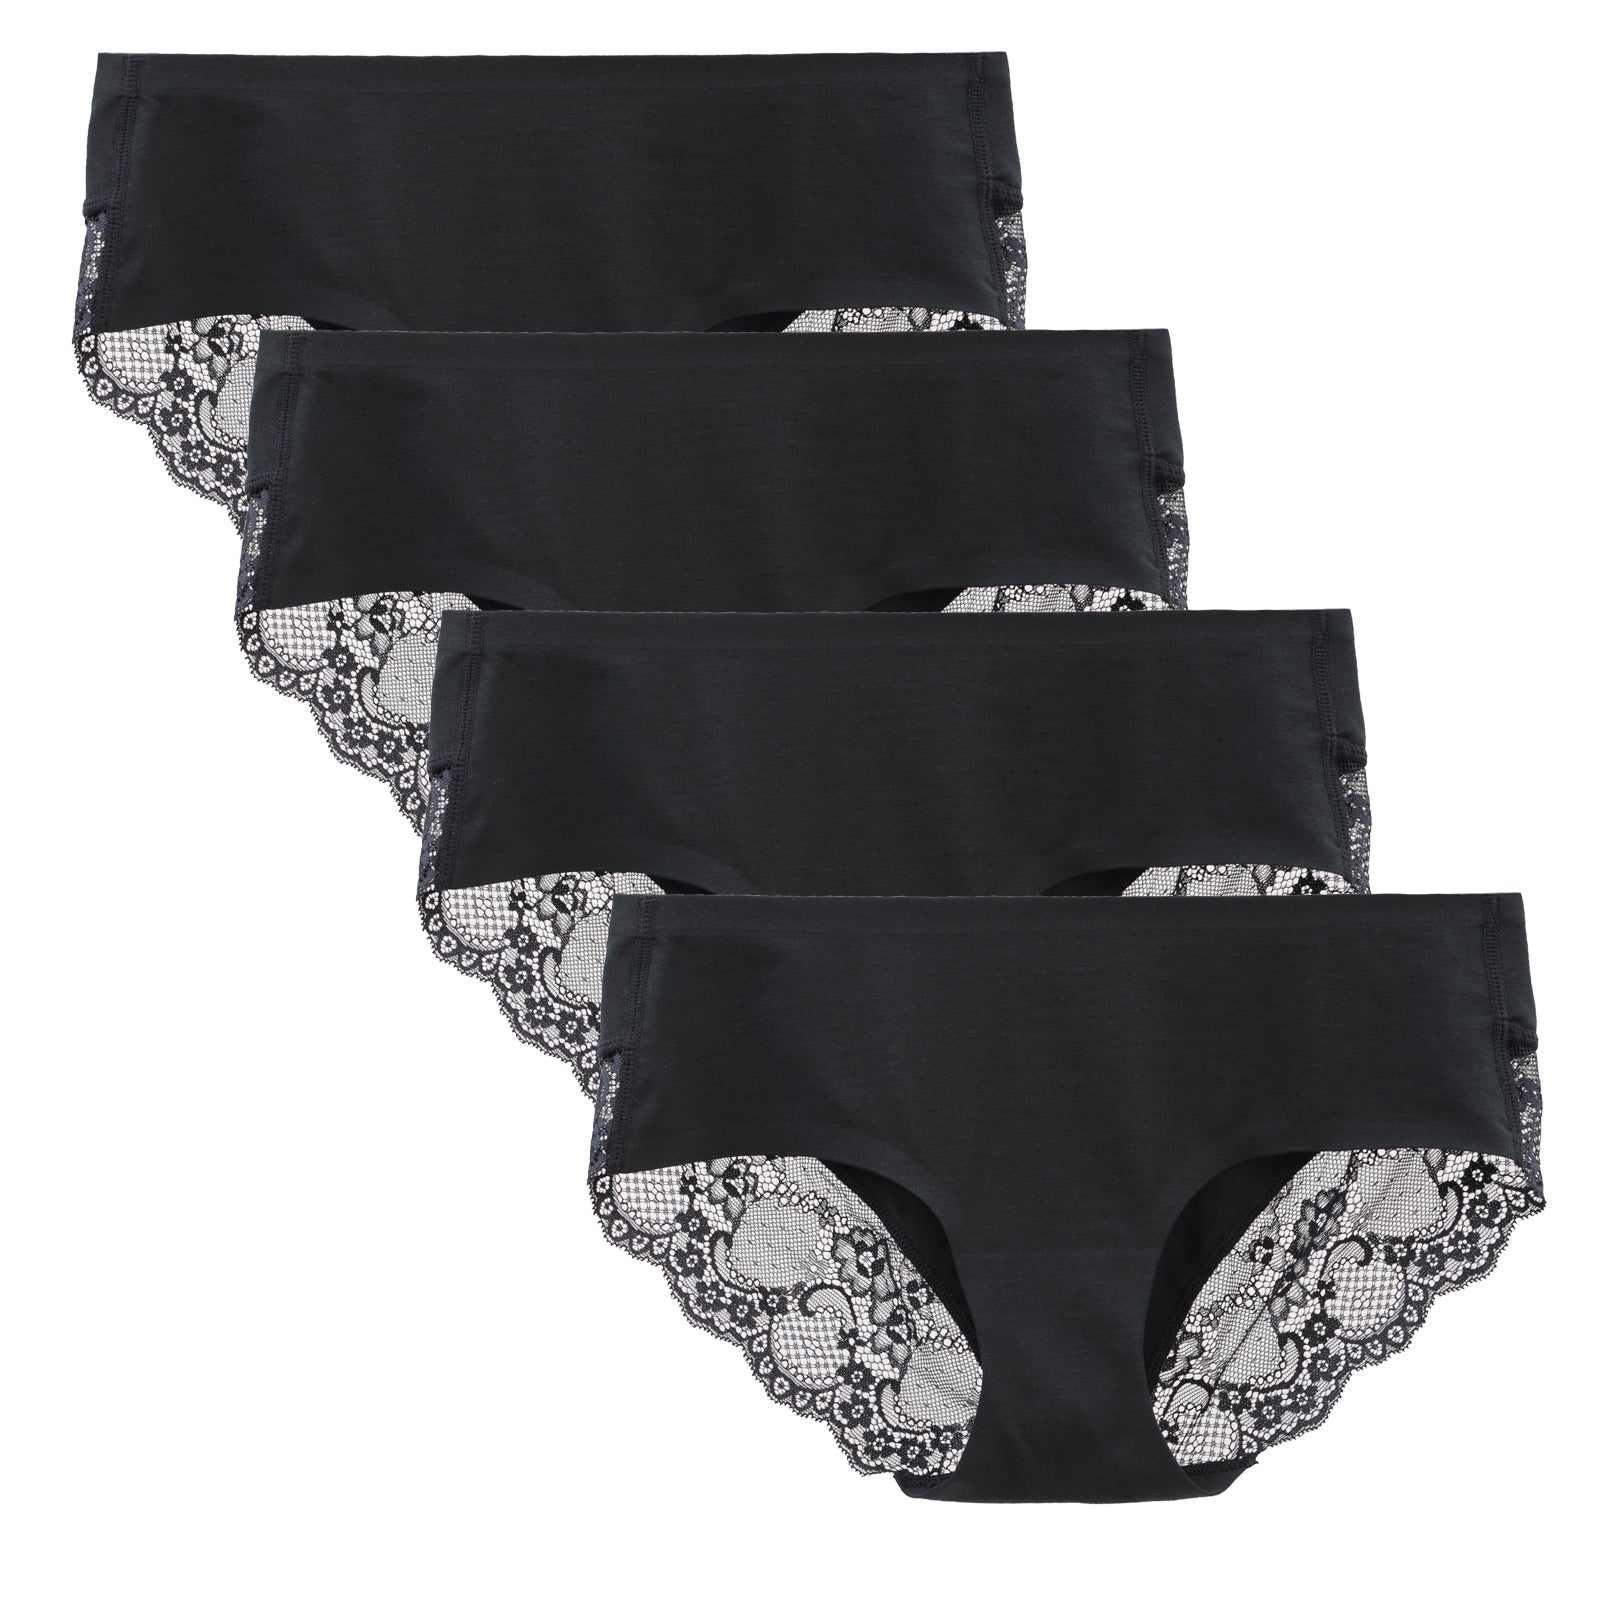 Women’s Panties Hipster Underwear for women (Pack of 4 )